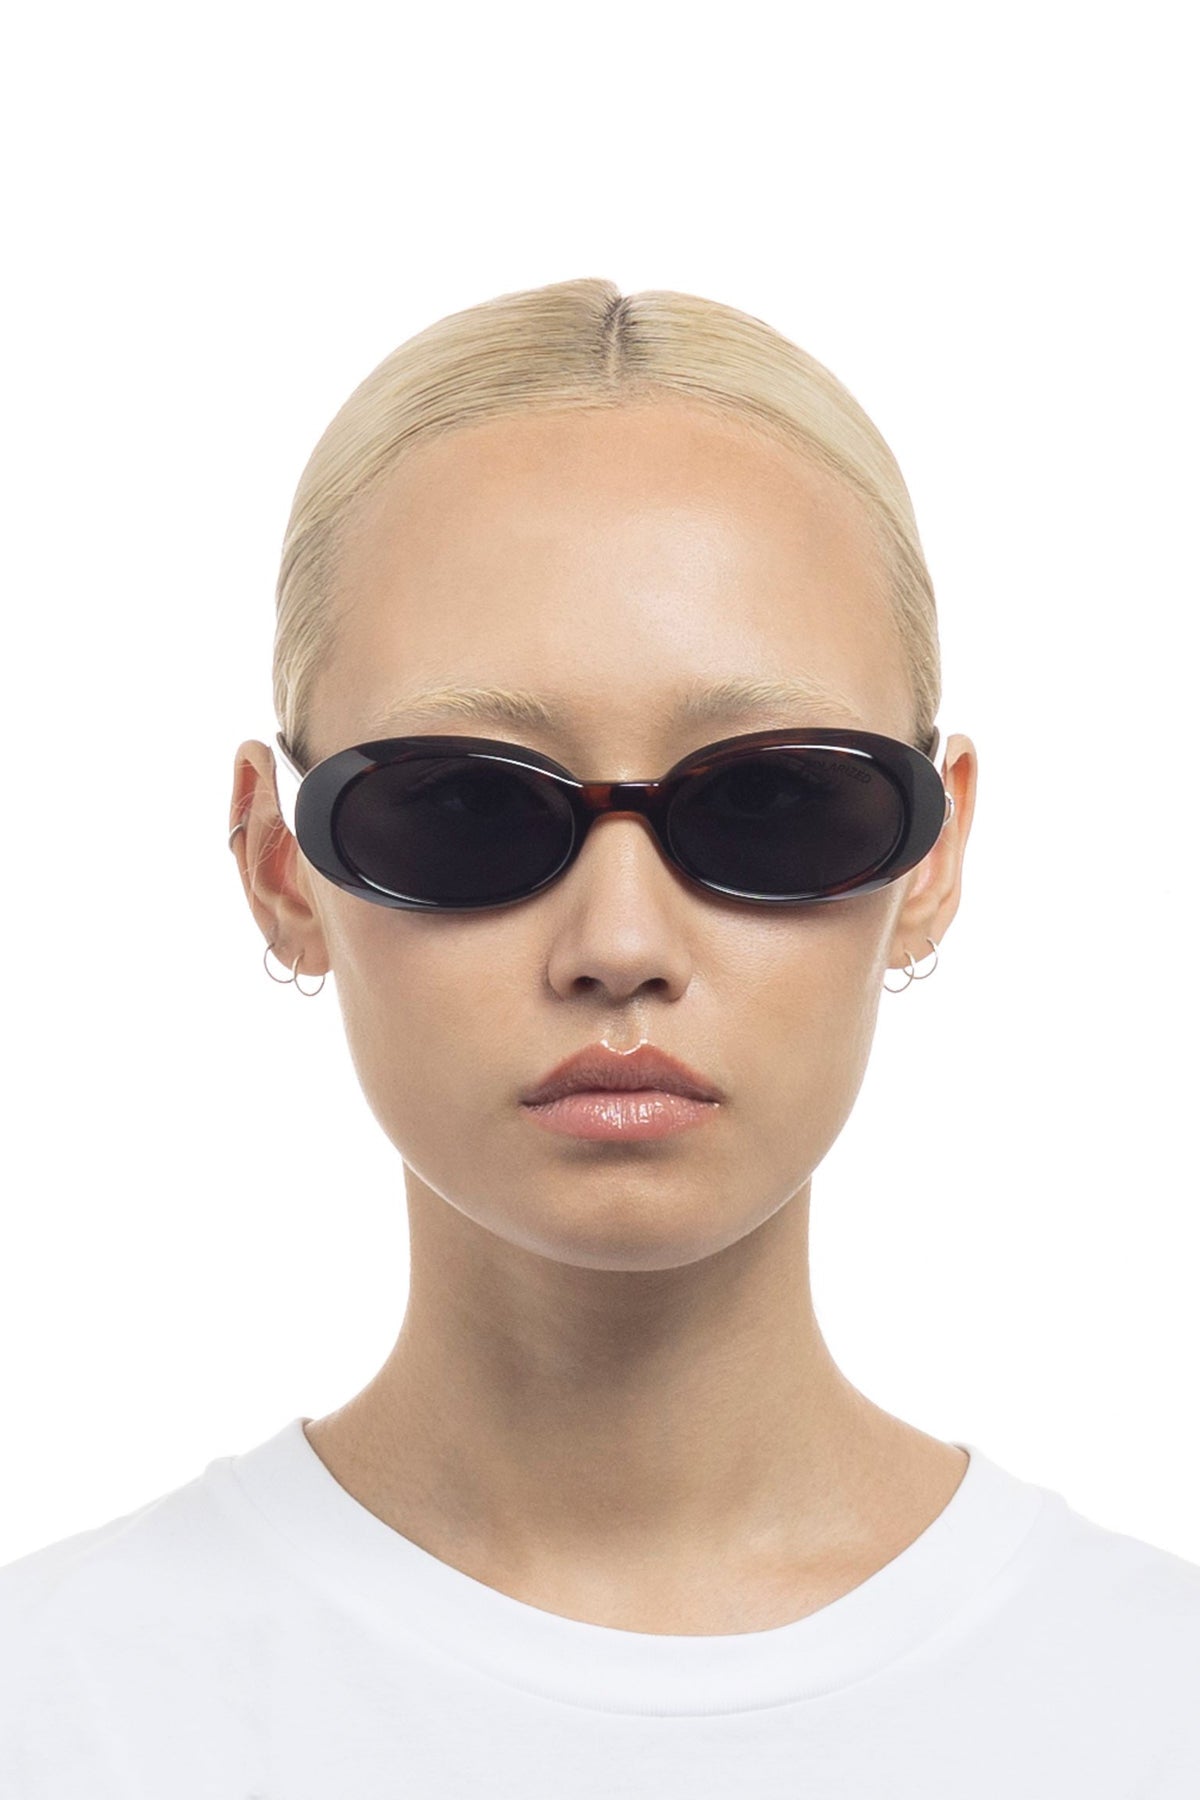 Le Specs Work It! Sunglasses - Dark Tort *Polarized* - RUM Amsterdam